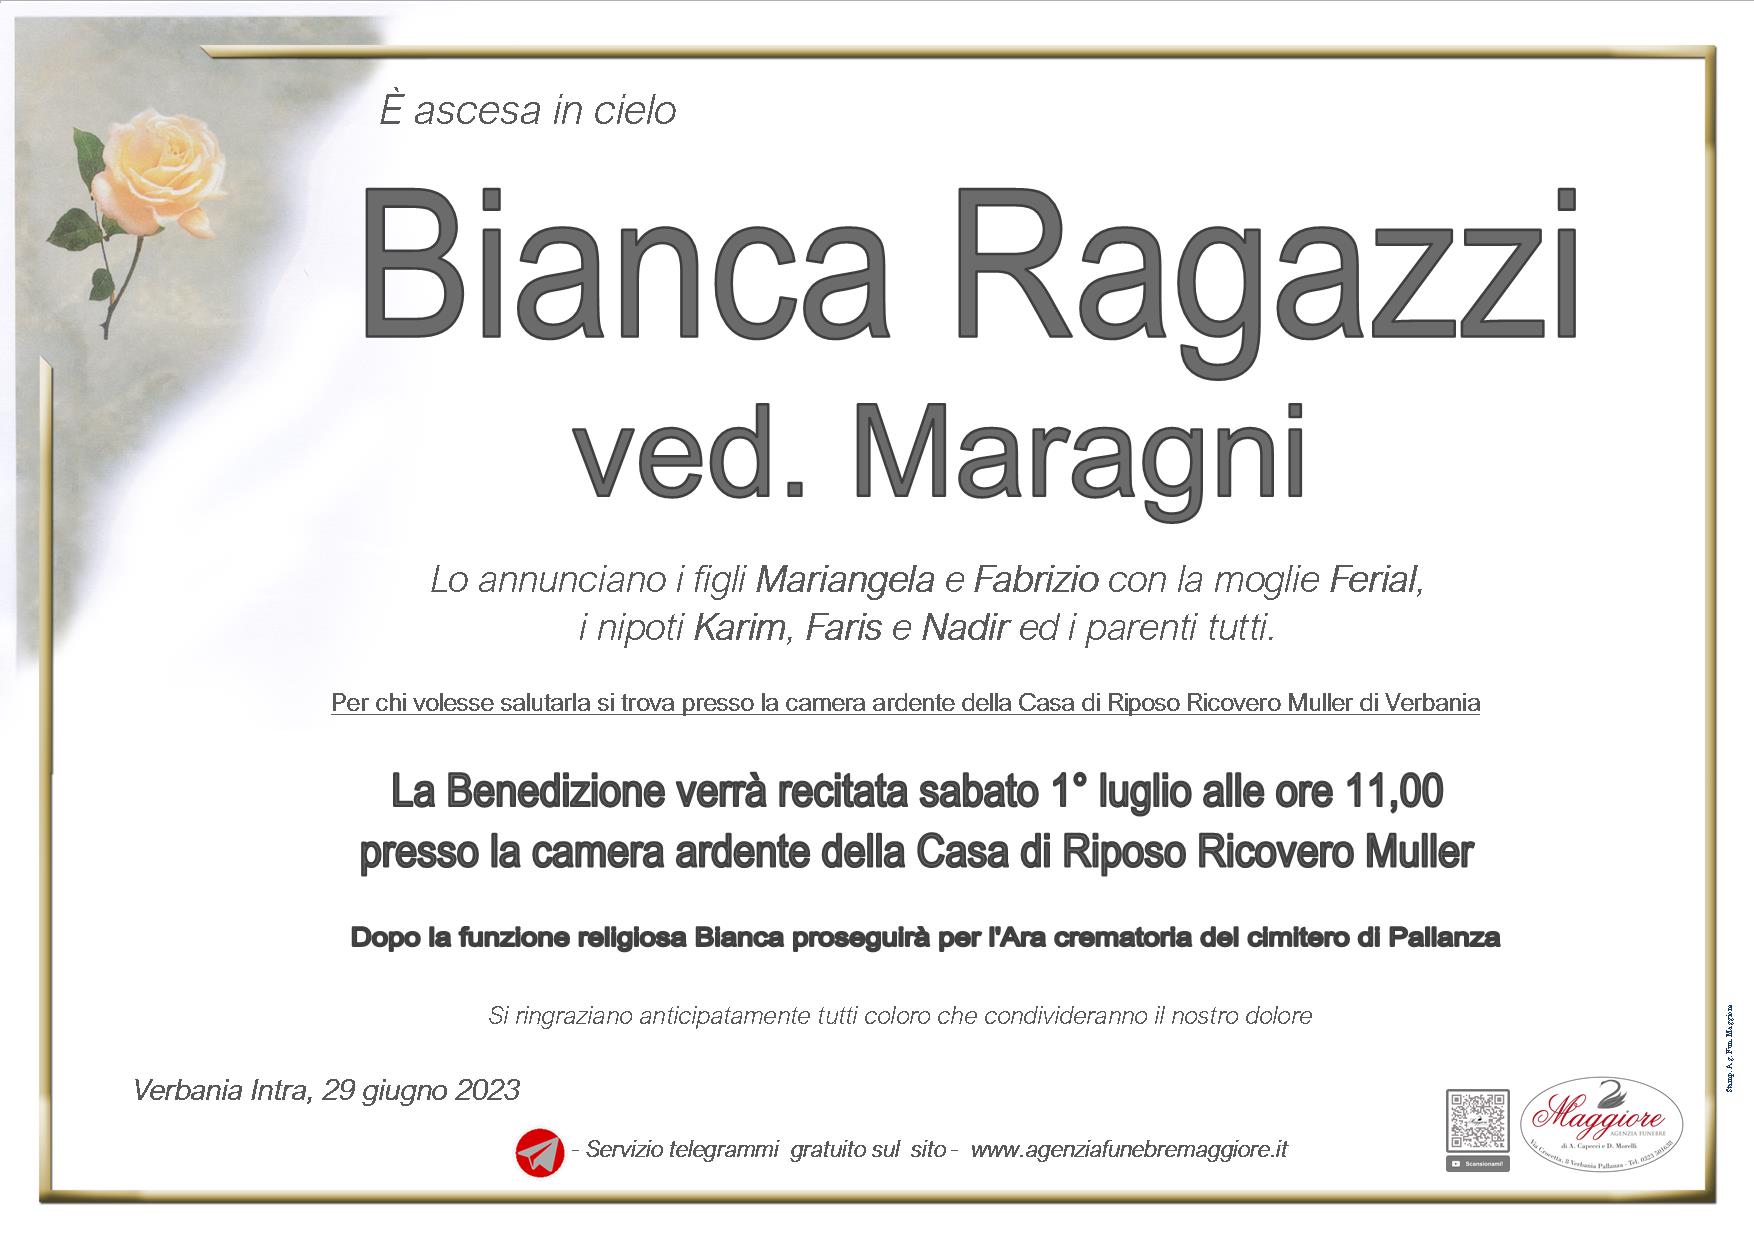 Bianca Ragazzi ved. Maragni